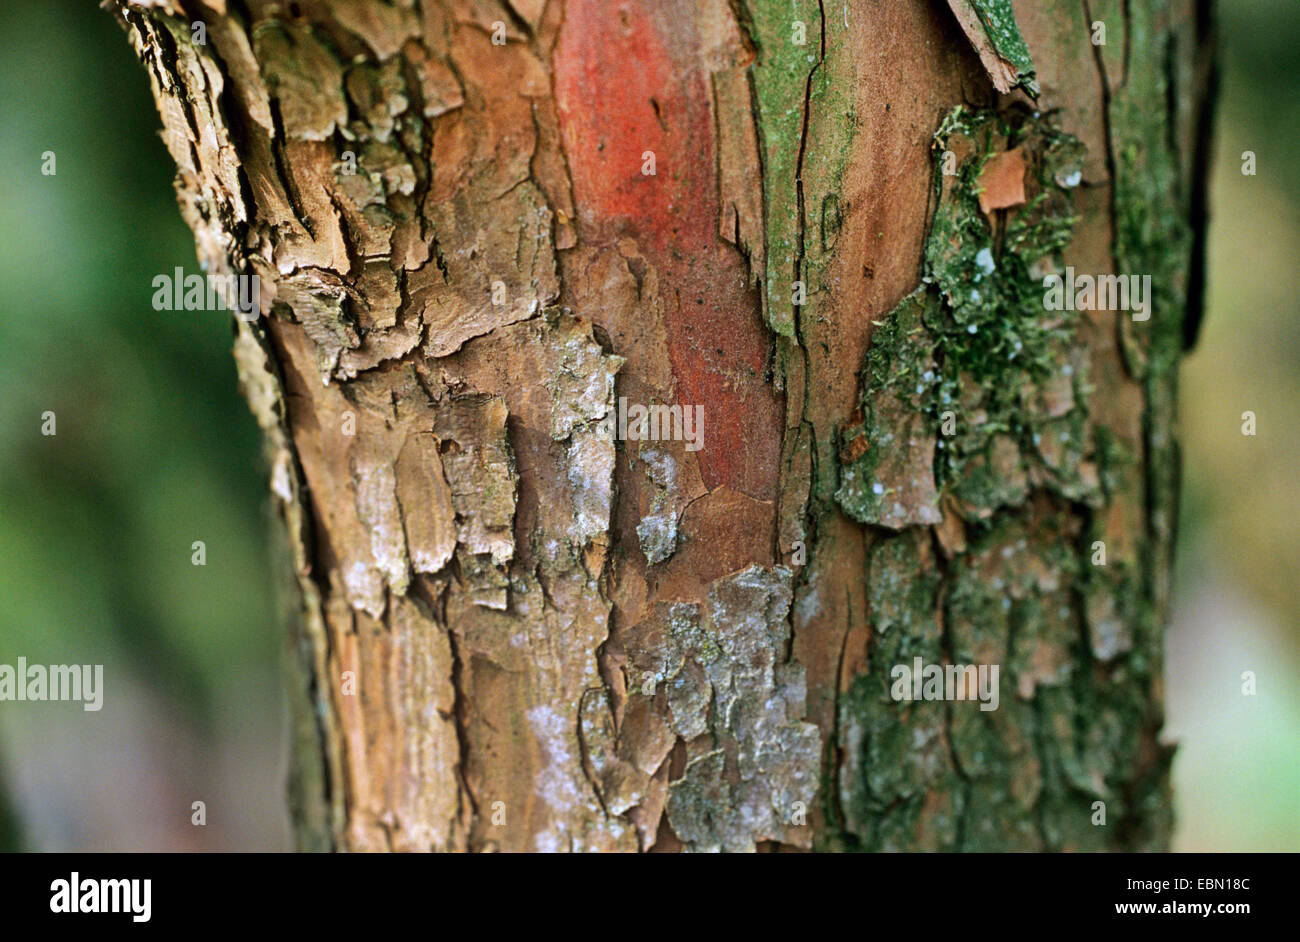 Giapponese yew, piramidale yew (Taxus cuspidata), corteccia Foto Stock